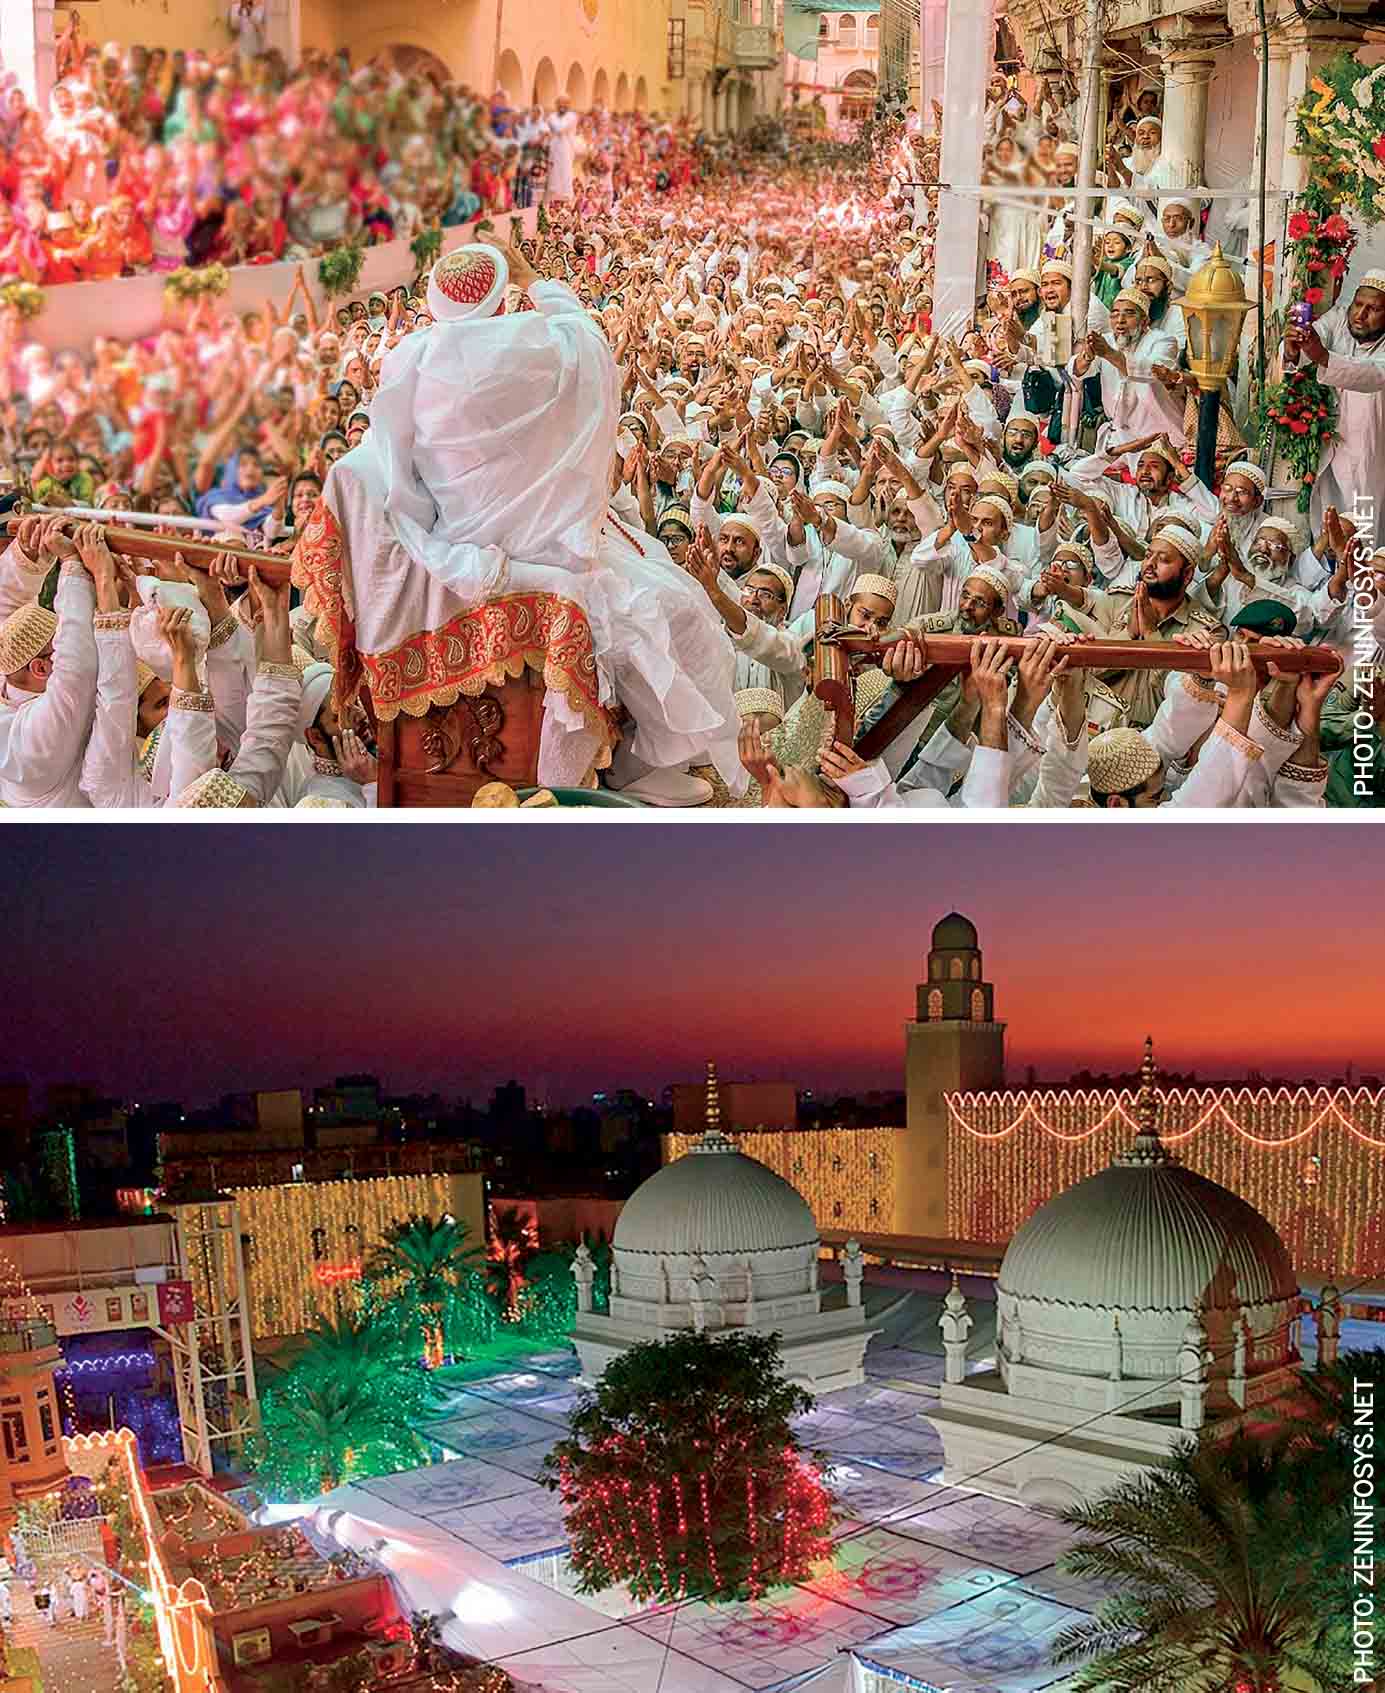 redefining-public-space-sacred-meanings-53rd-al-dai-mutlaq-syedna-mufaddal-saifuddin-tus-crowd-dawoodi-bohra-followers-masjid-moazzam-during-milad-celebration